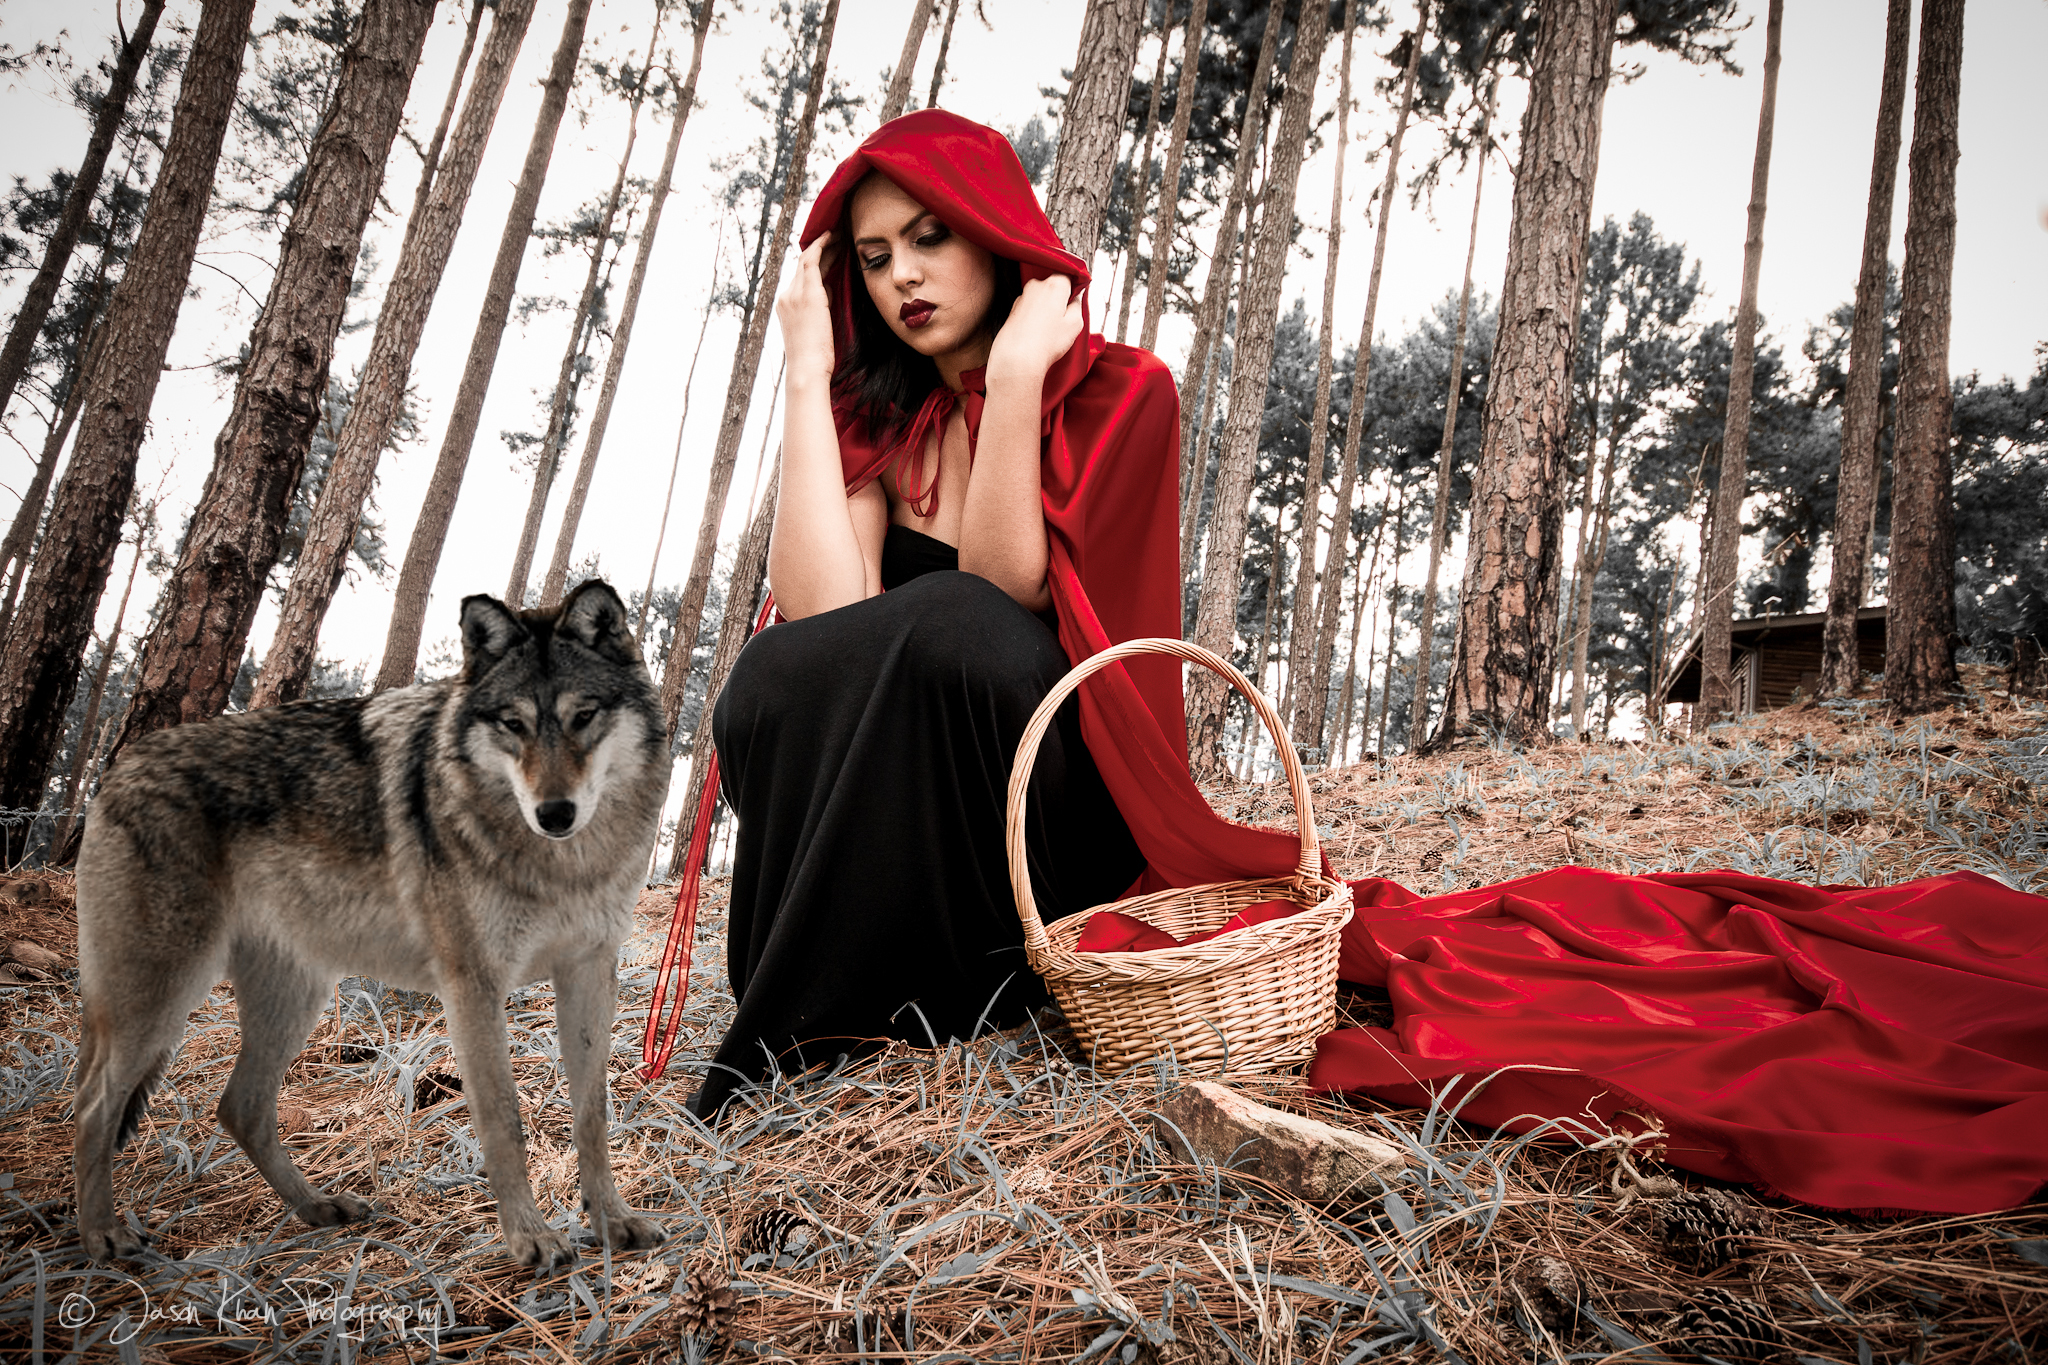 Kavita and The Wolf